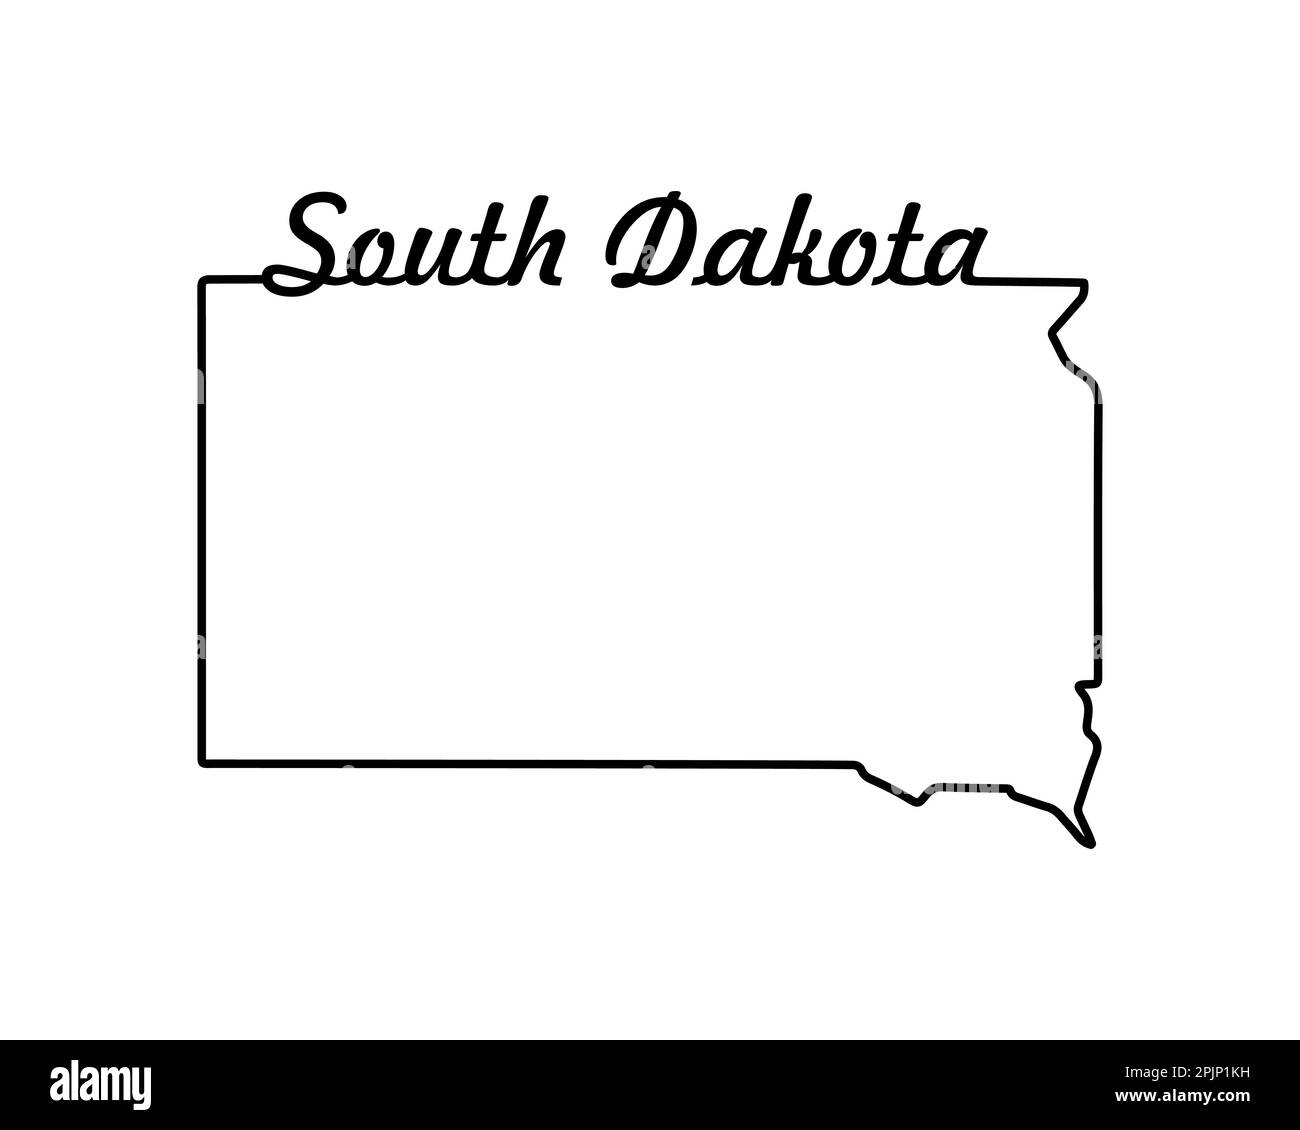 South Dakota state map. US state map. South Dakota outline symbol